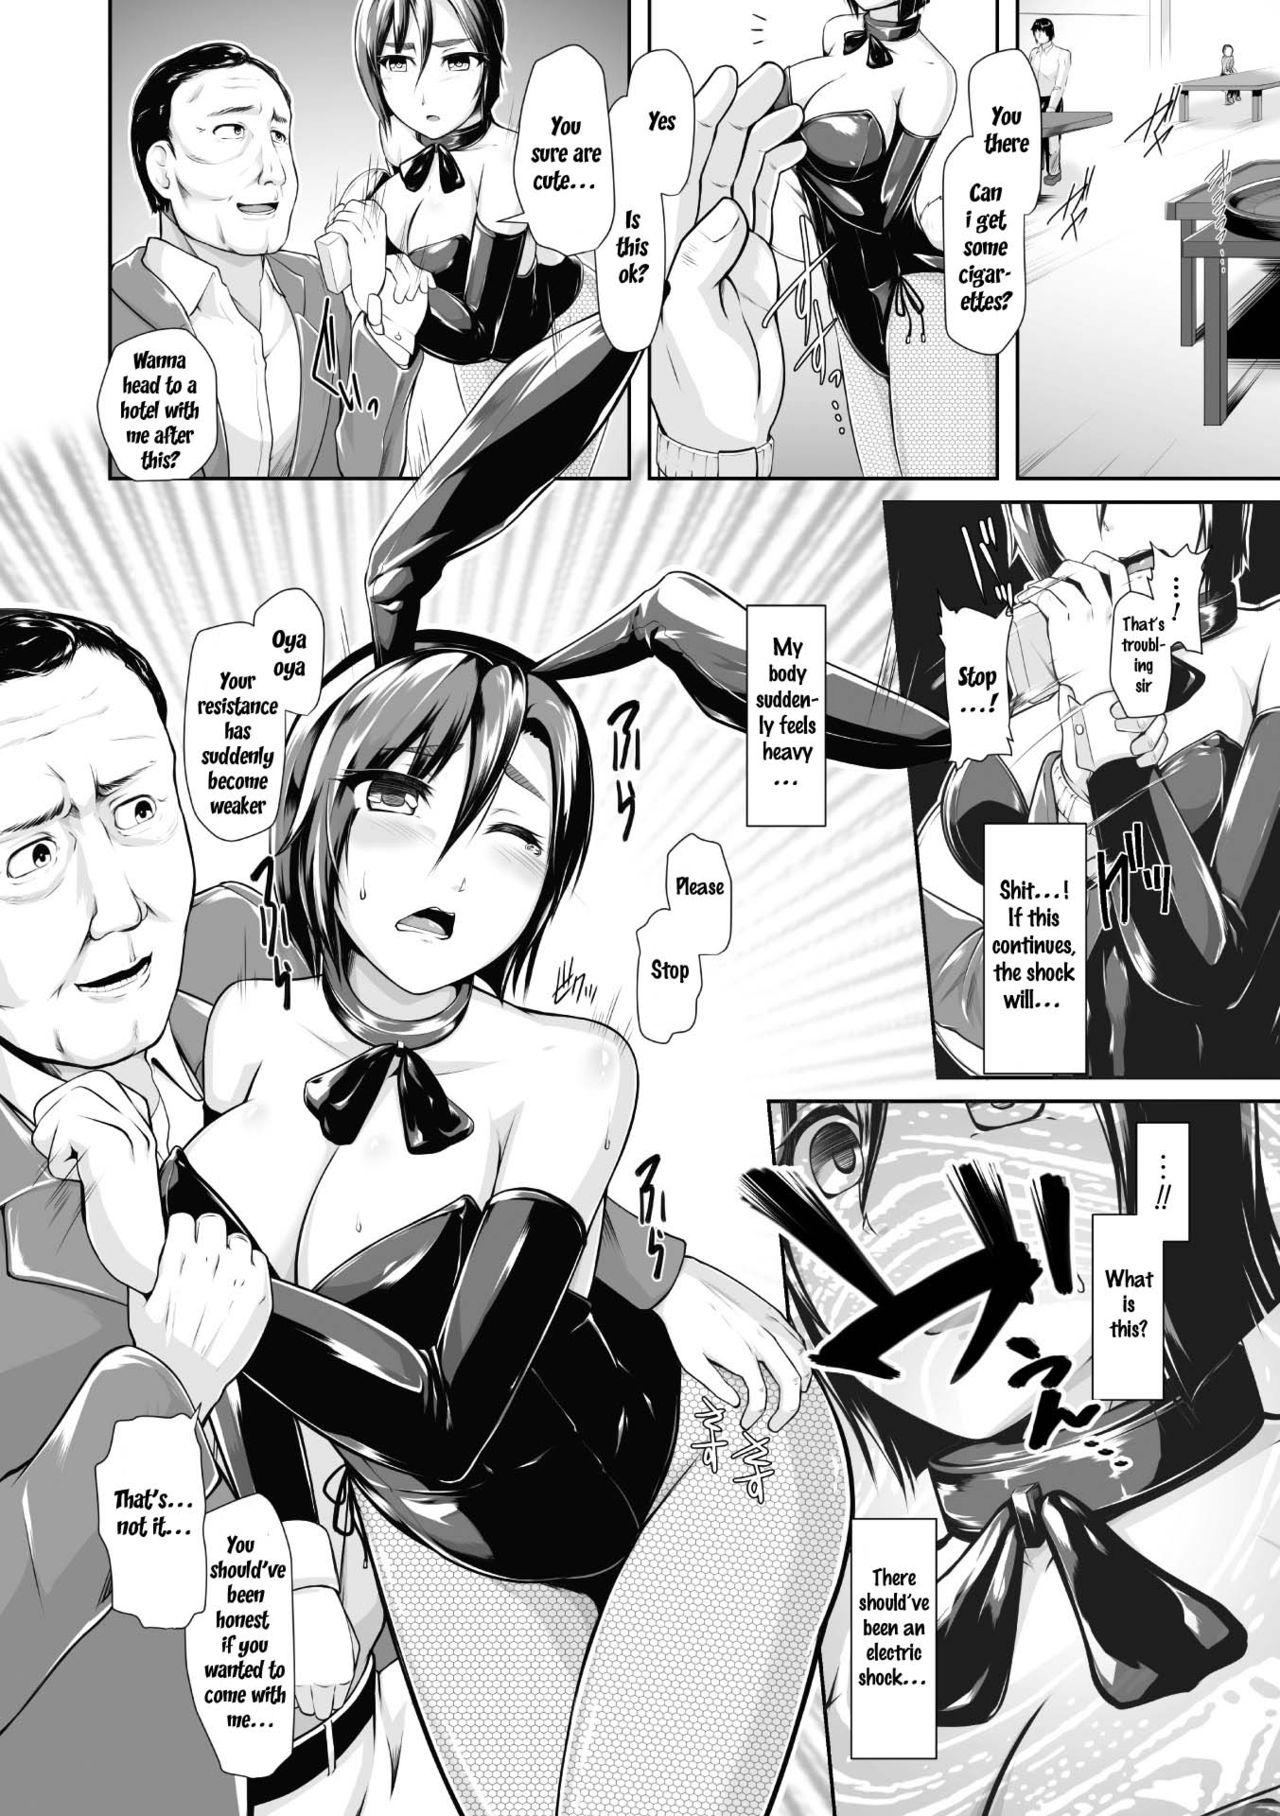 Analfuck 2D Comic Magazine Waki Fechi Bunny Girl Vol.1 Ch 1-3 Classy - Page 8